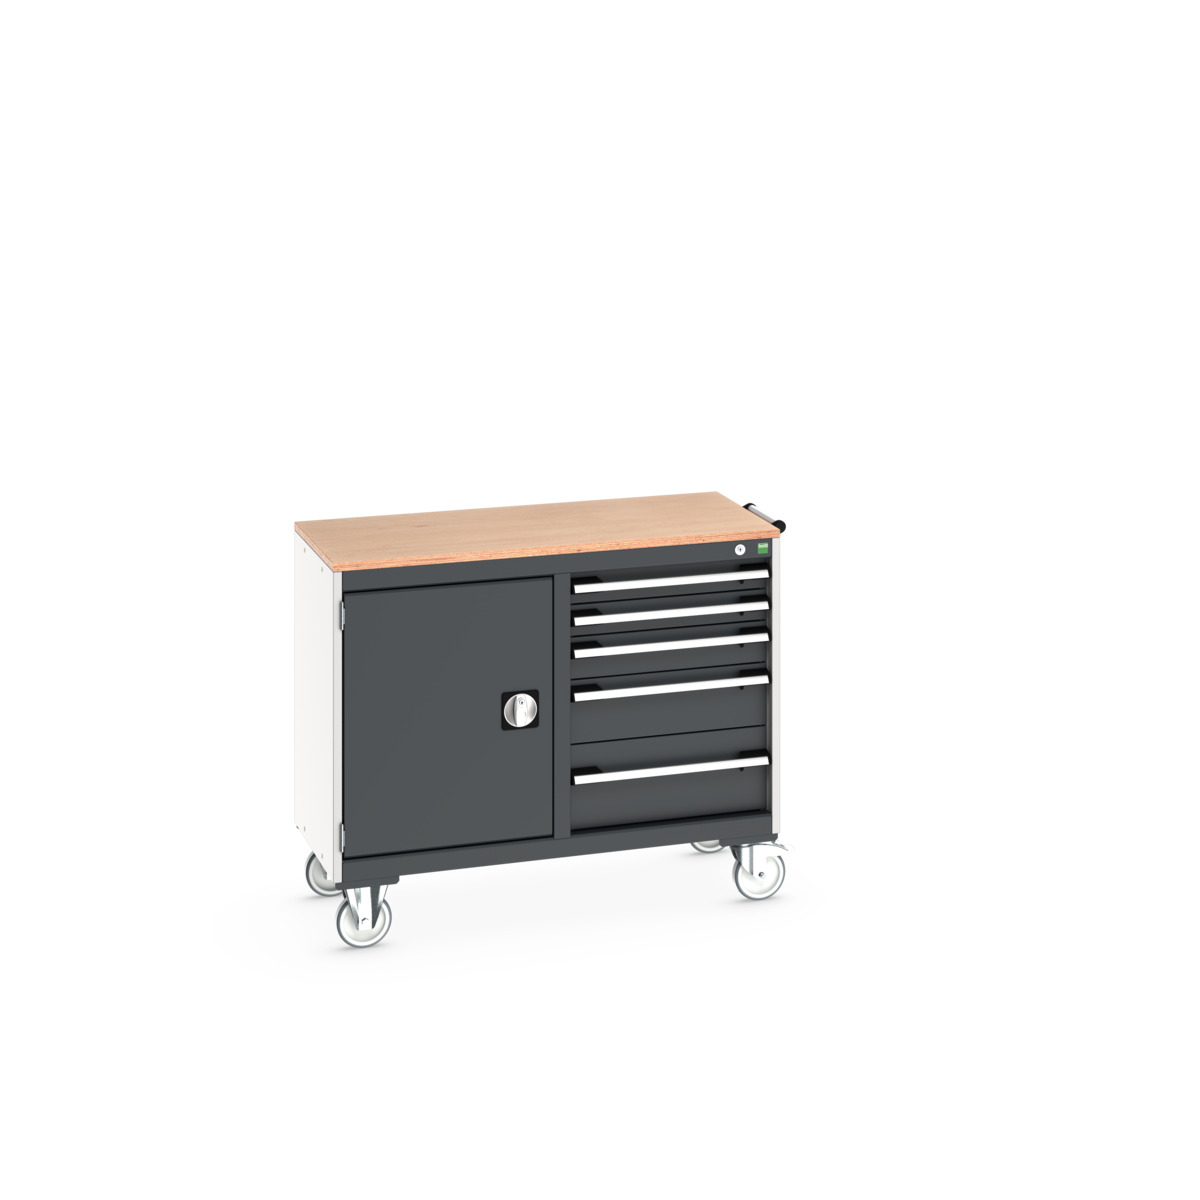 41006007. - cubio mobile cabinet 50/50 (mpx)